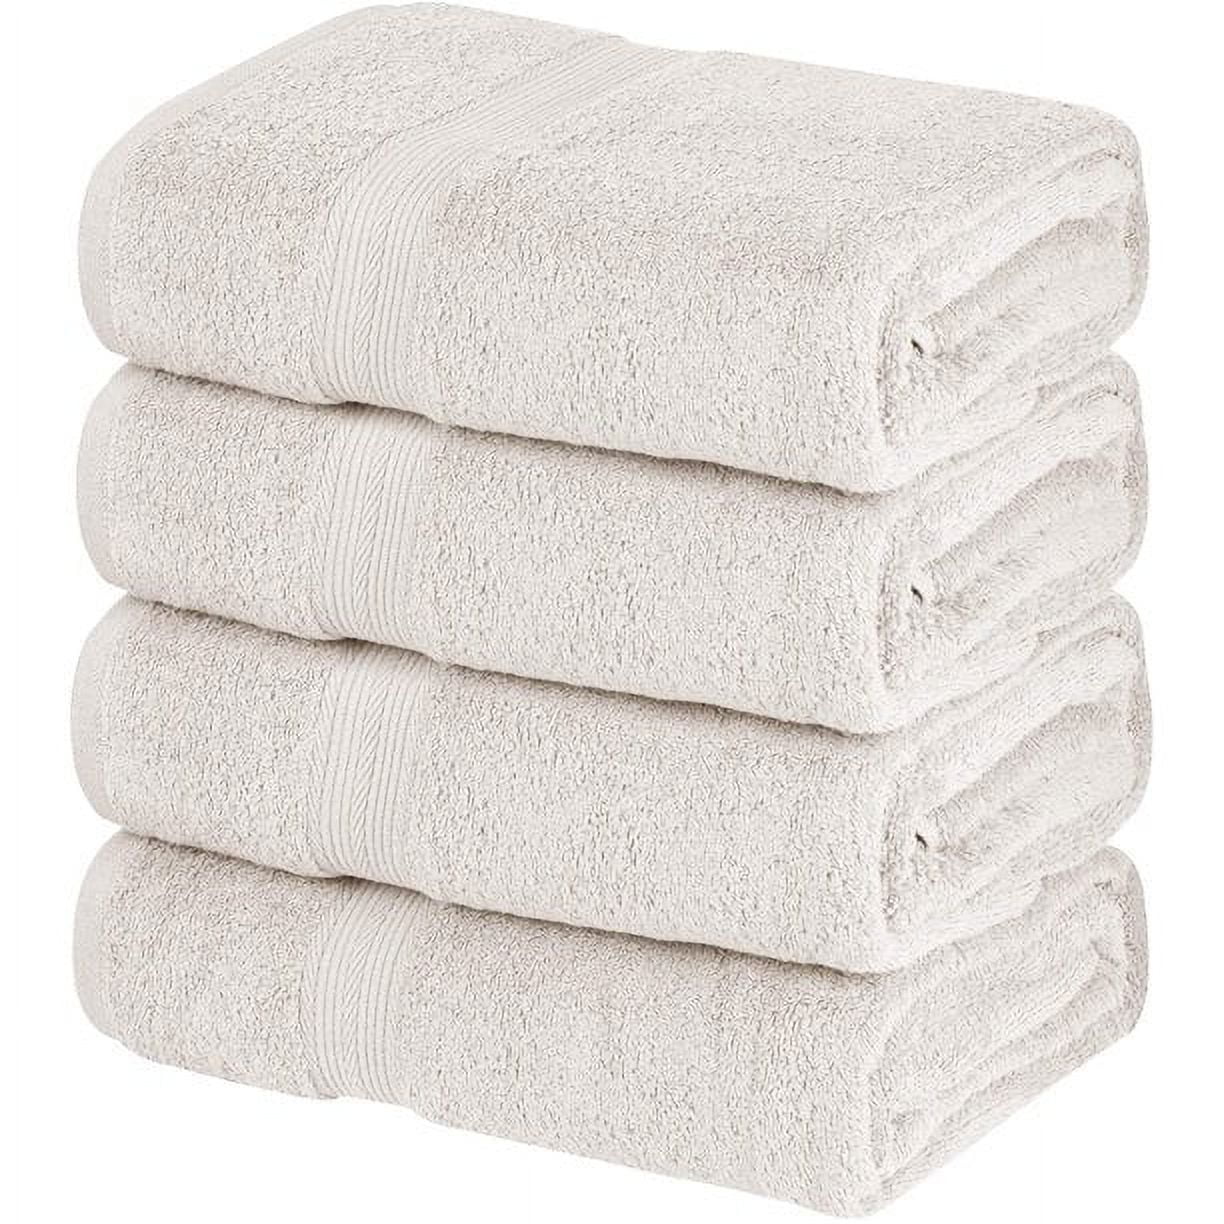  Hawmam Linen White Hand Towels 4-Pack -16 x 29 Turkish